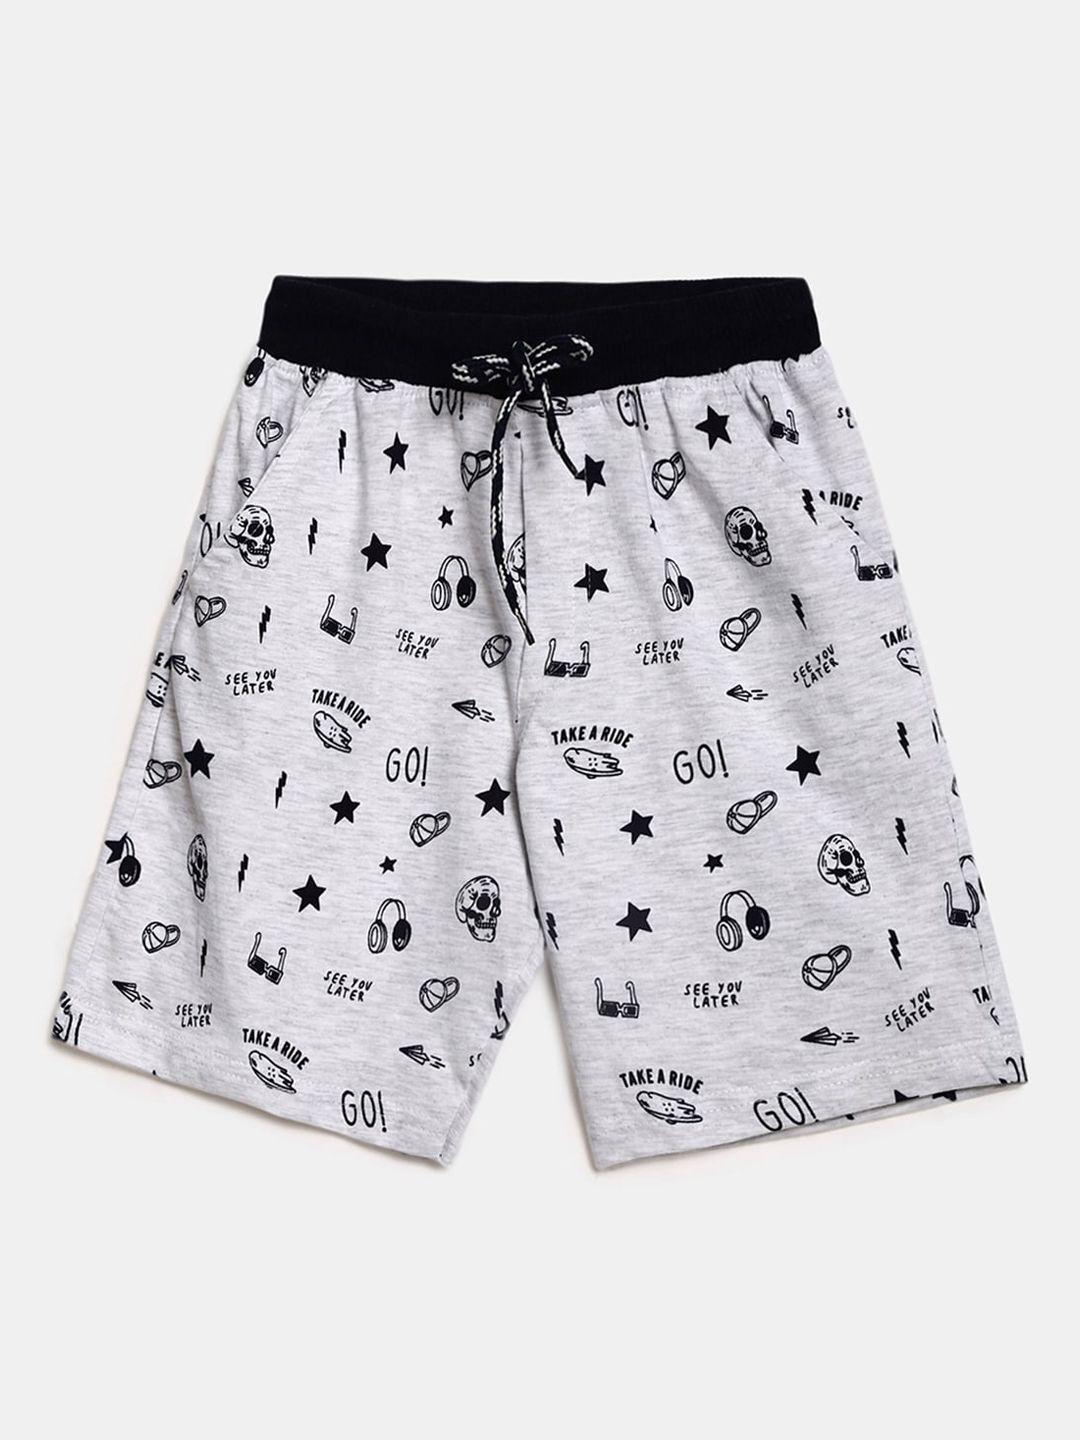 v-mart unisex kids grey printed outdoor shorts